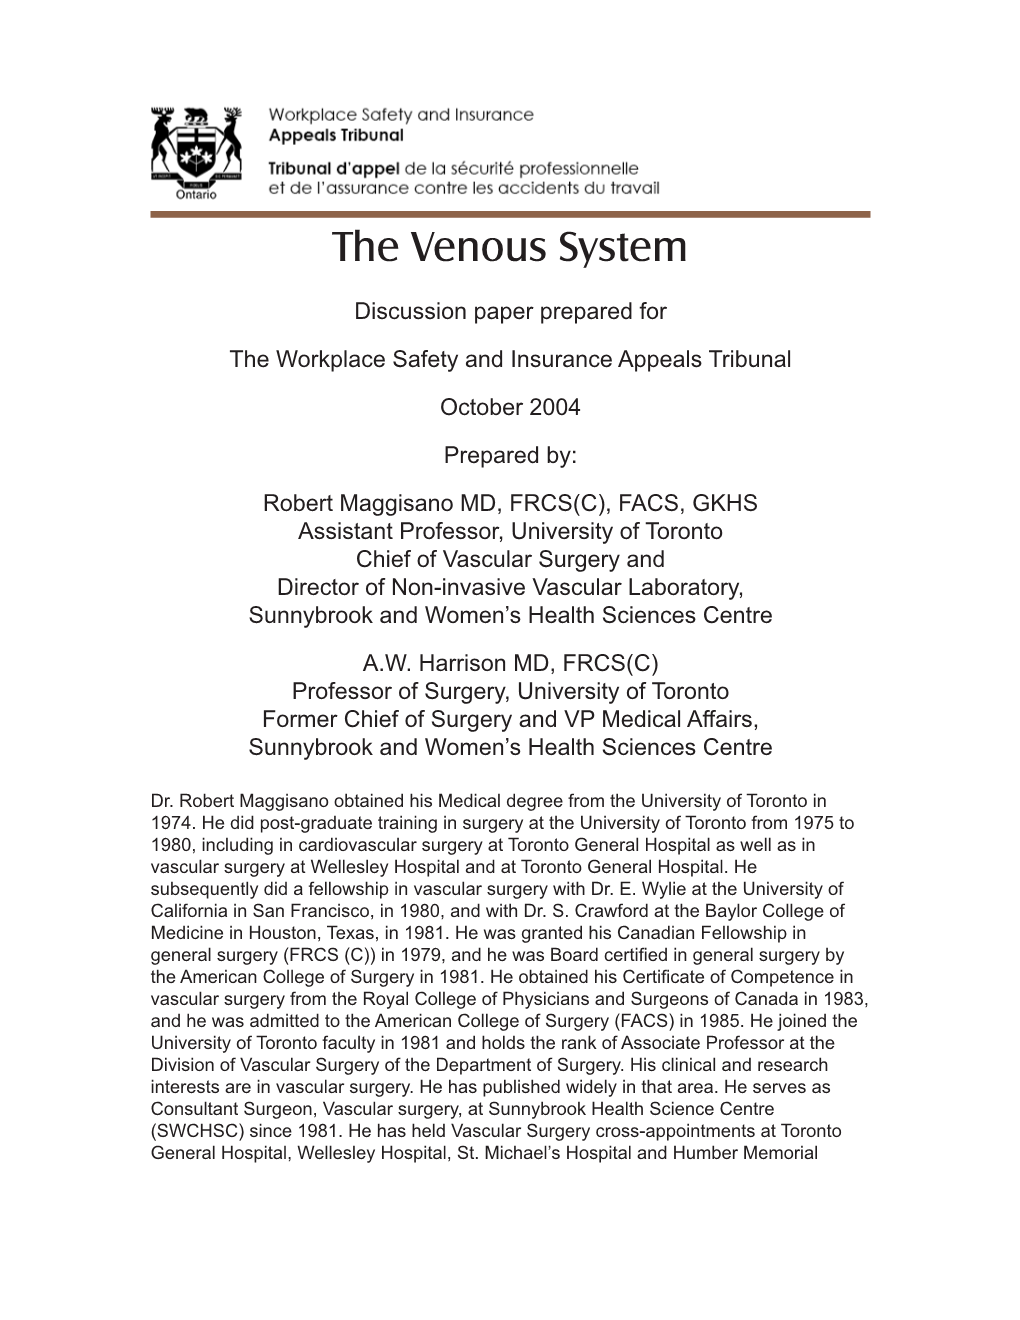 The Venous System